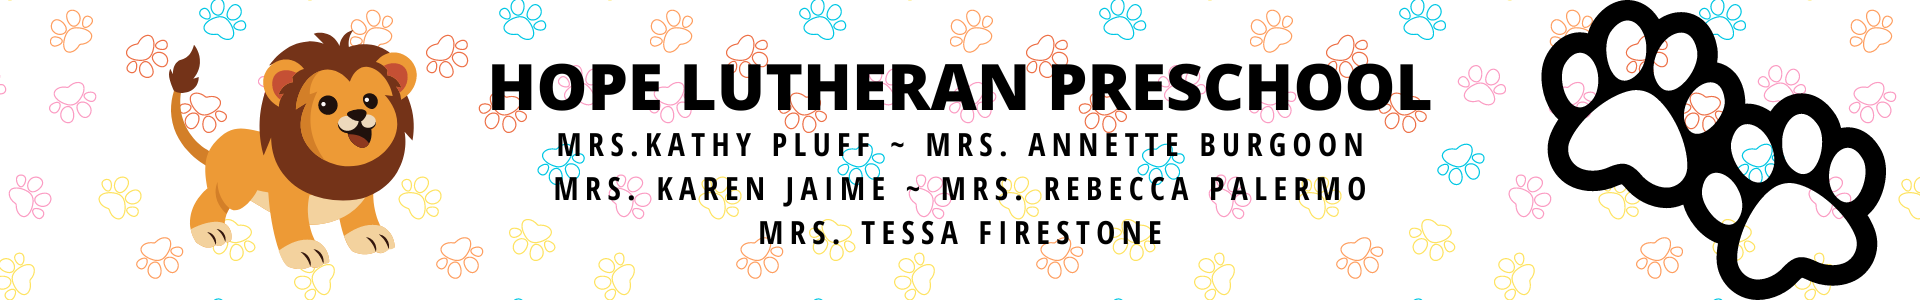 Hope Lutheran Preschool<br />
Mrs. Kathy Pluff, Mrs. Annette Burgoon, Mrs. Karen Jaime, Mrs. Rebecca Palermo